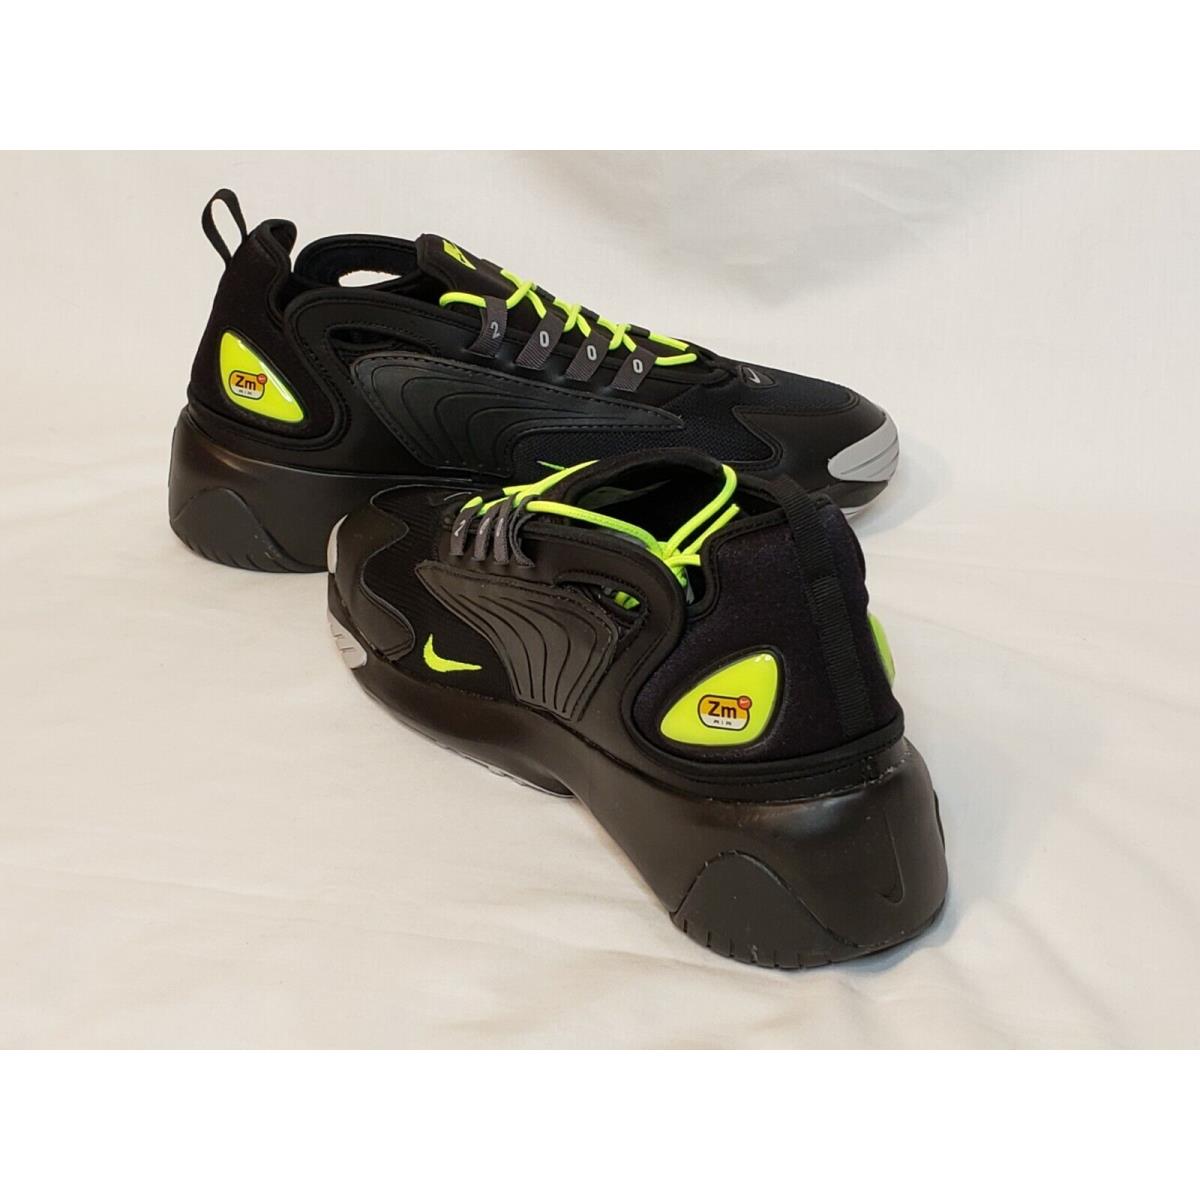 Nike shoes Zoom - Black/Volt-Anthracite 9